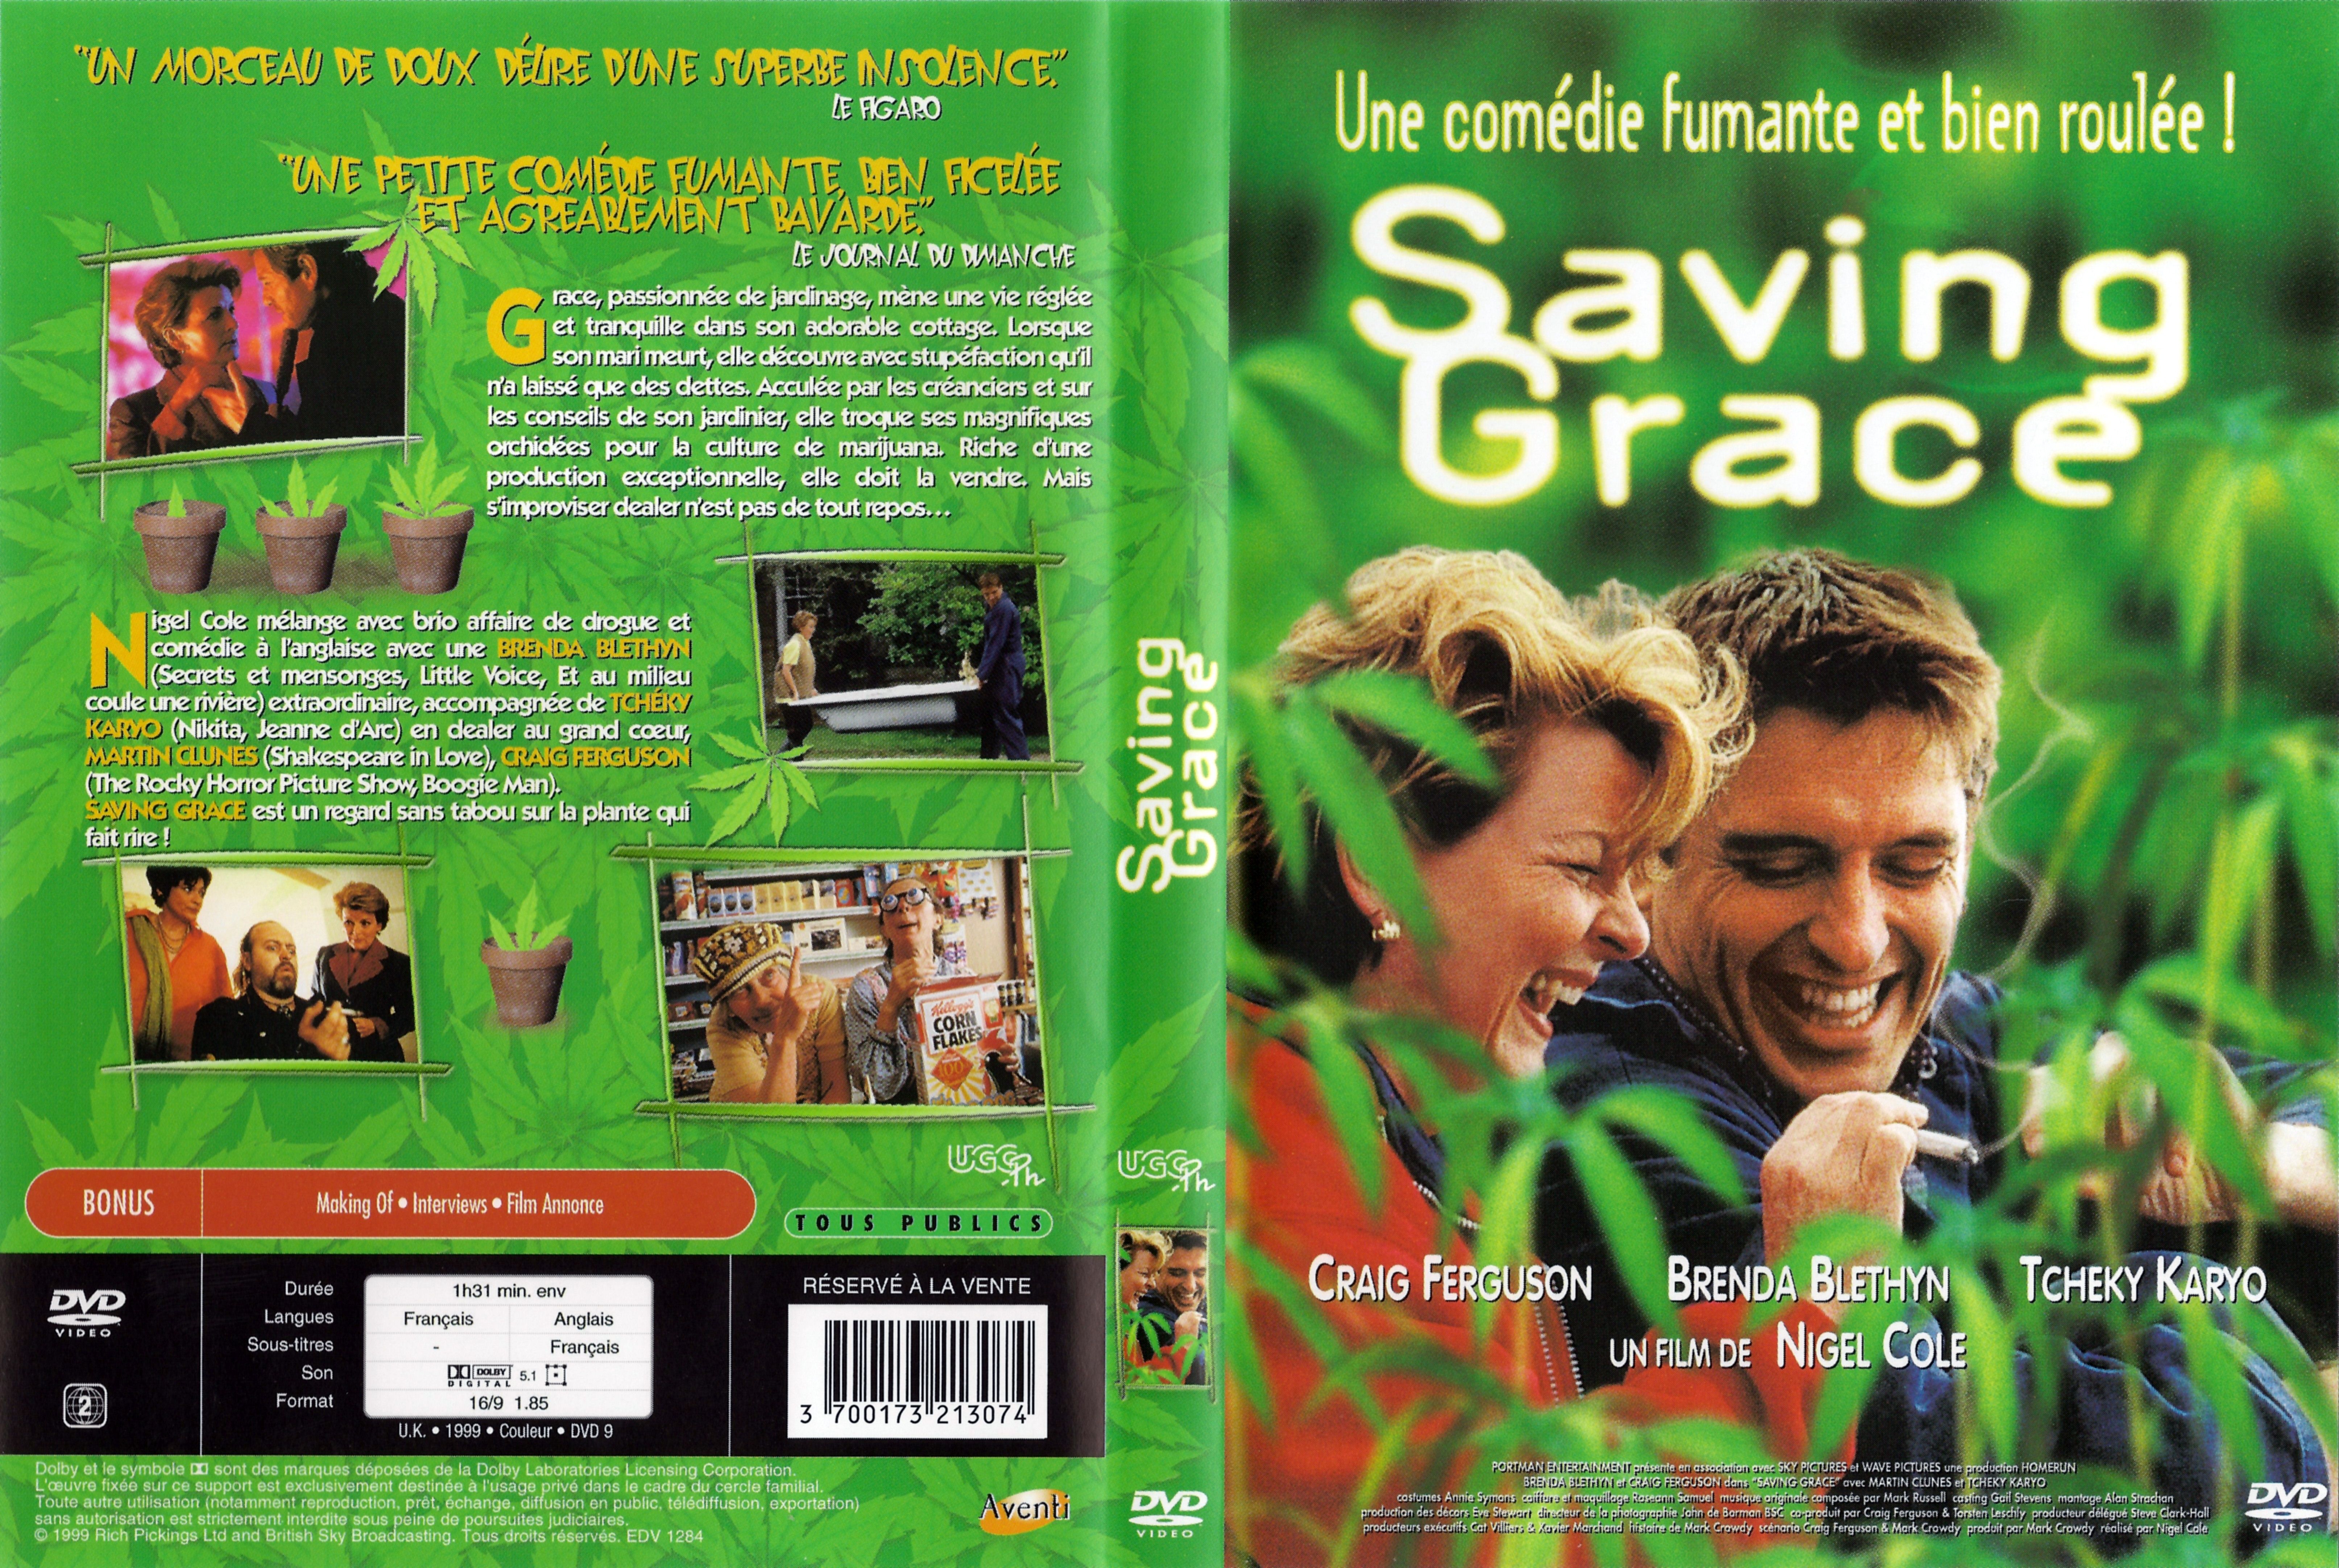 Jaquette DVD Saving grace